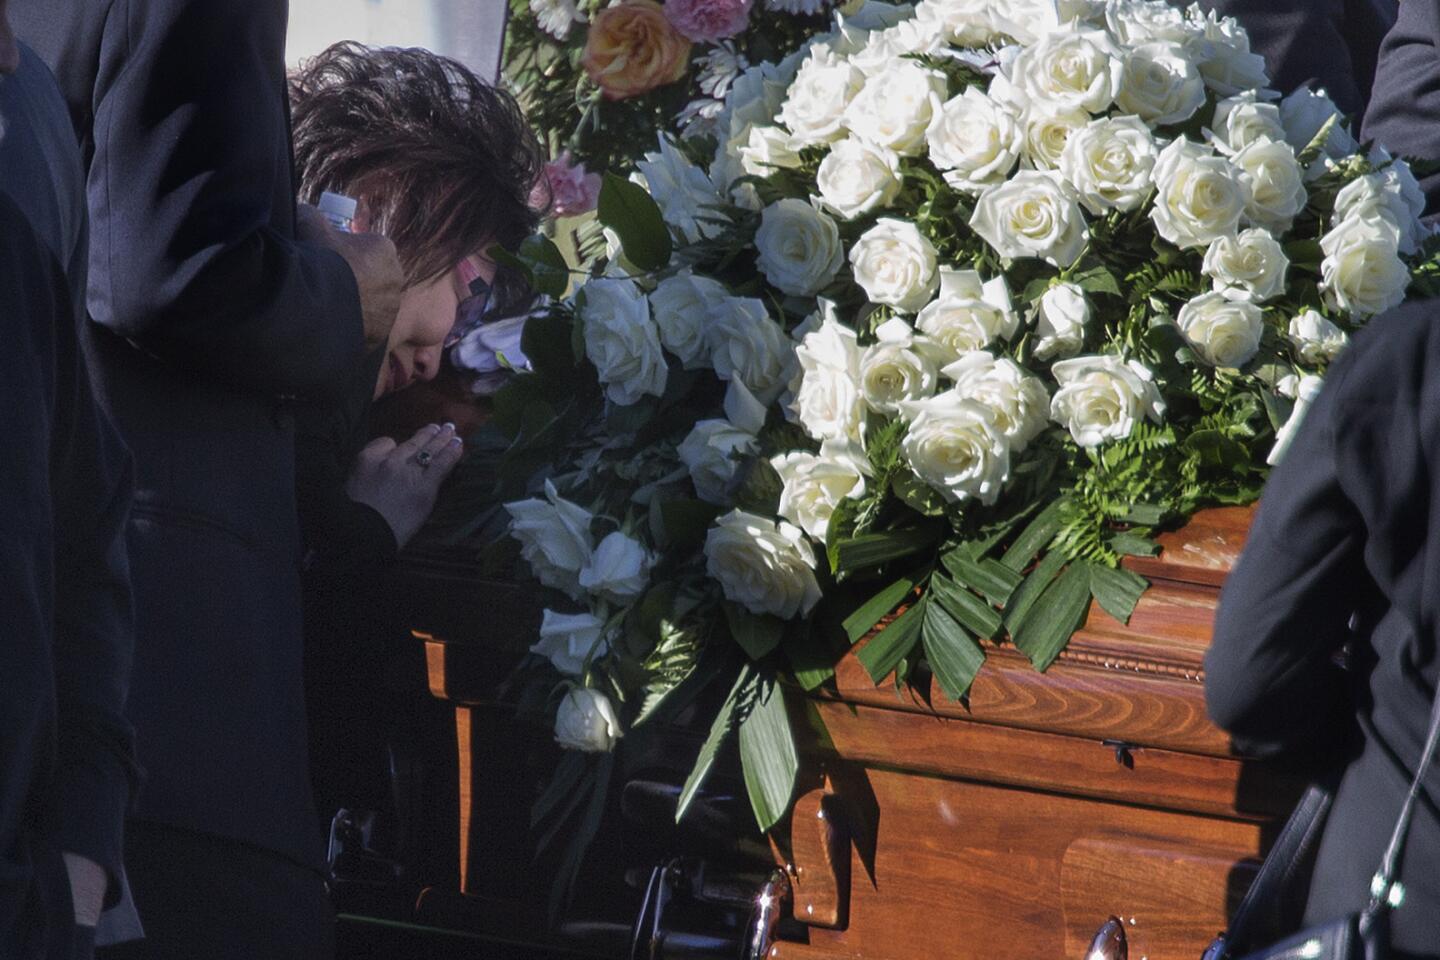 Robert Adams' funeral